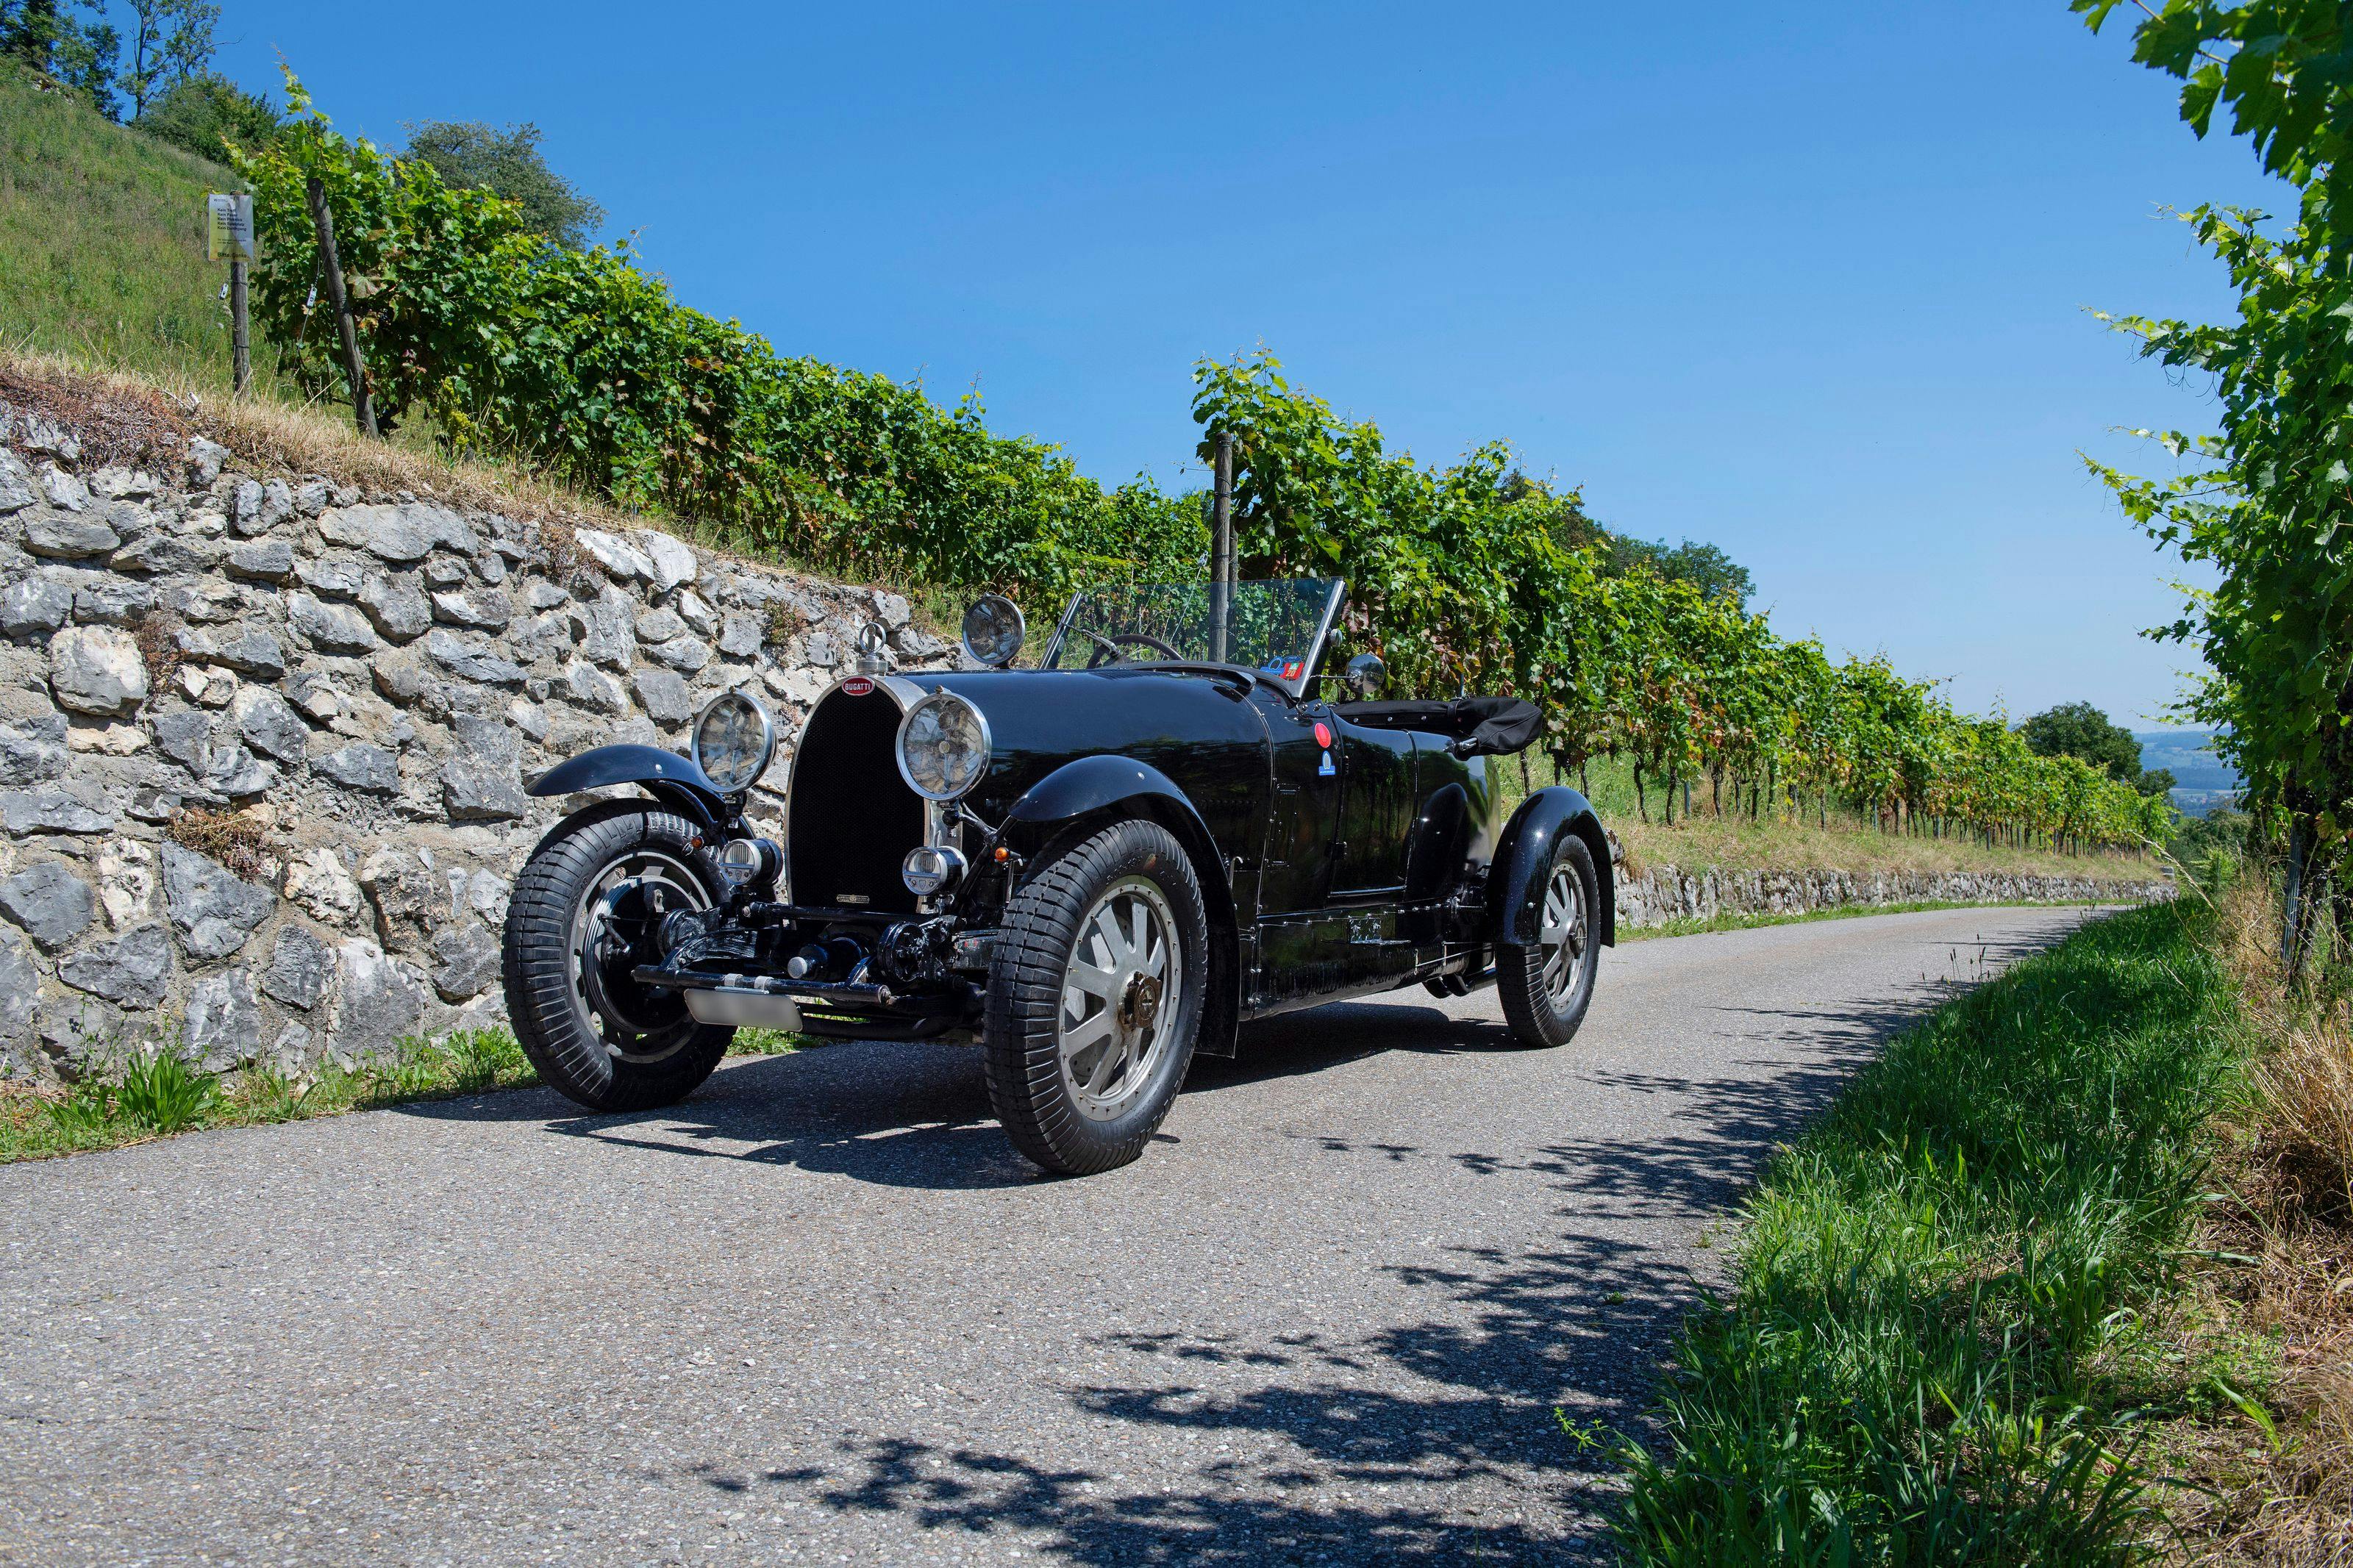 Bugatti customer care – About the magic of the brand